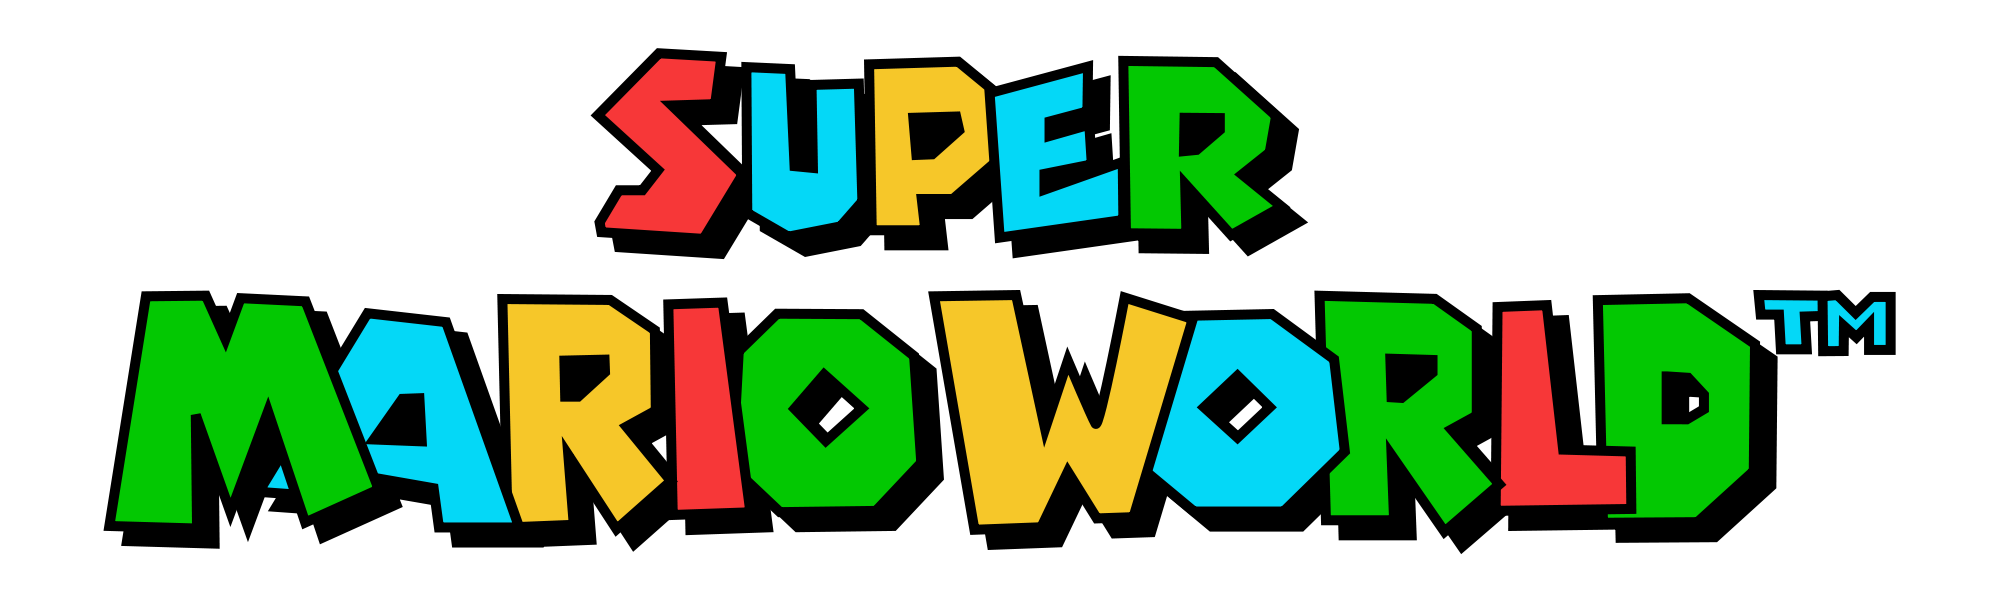 Imagen - Super Mario World Logo.png | Super Mario Wiki | FANDOM powered